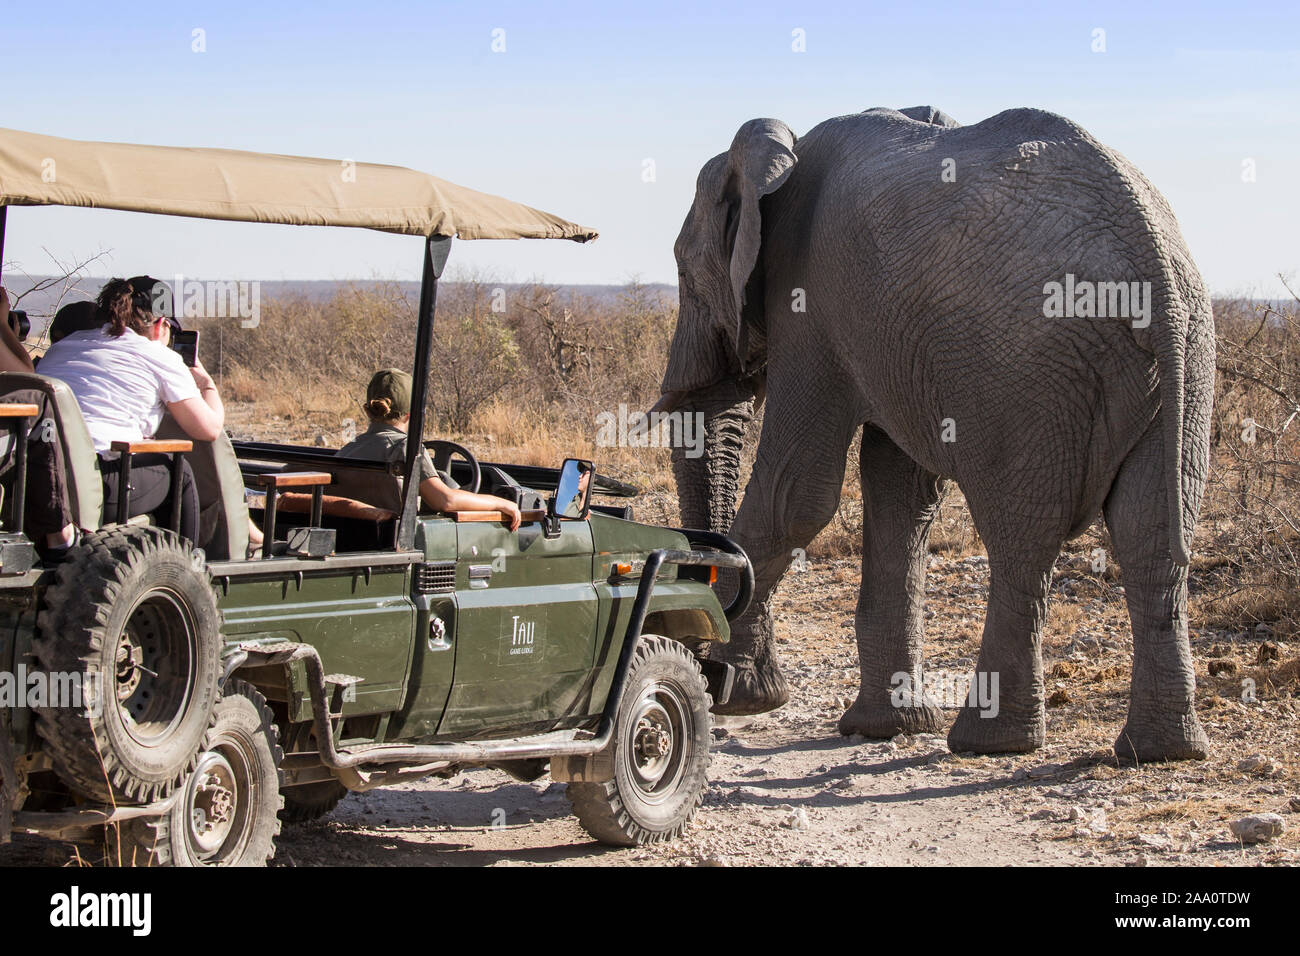 jeep safari meets an elephant. Stock Photo